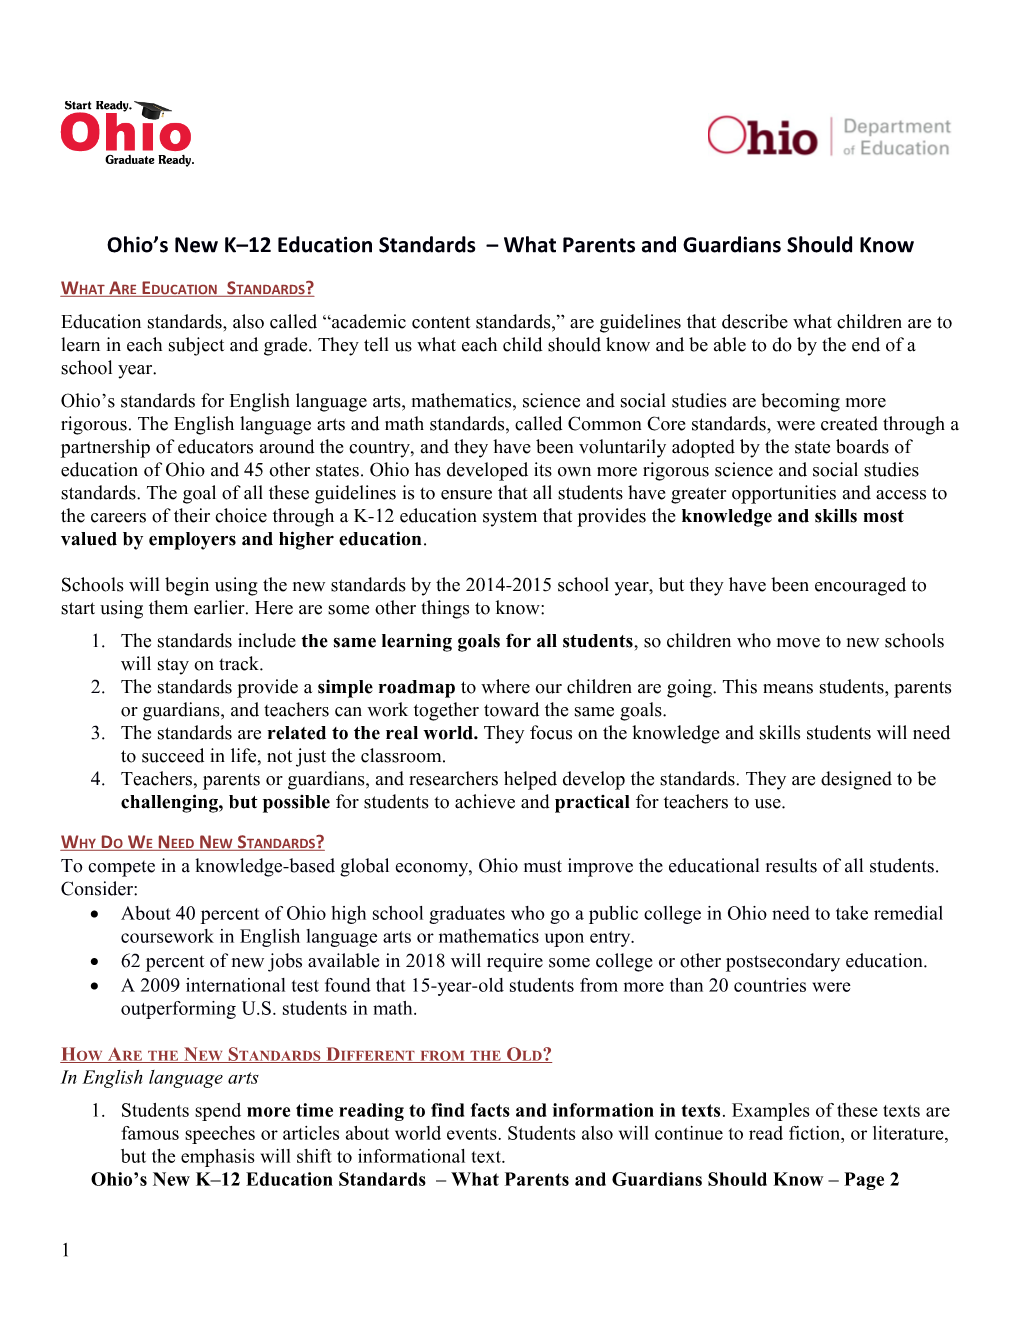 Ohio S New K 12 Education Standards What Parentsand Guardians Should Know